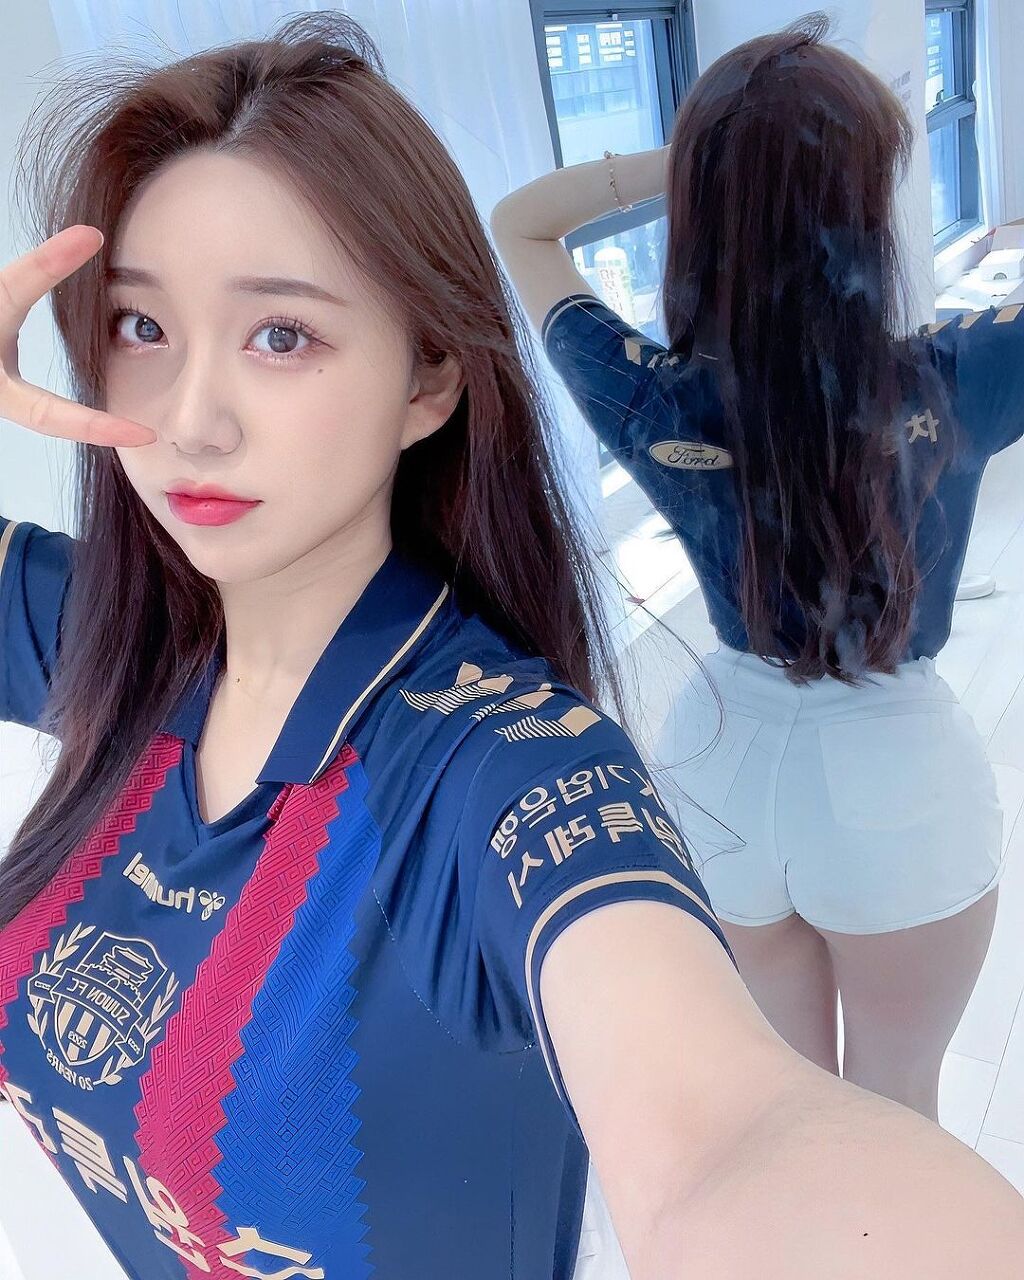 Suwon FC New Cheerleader